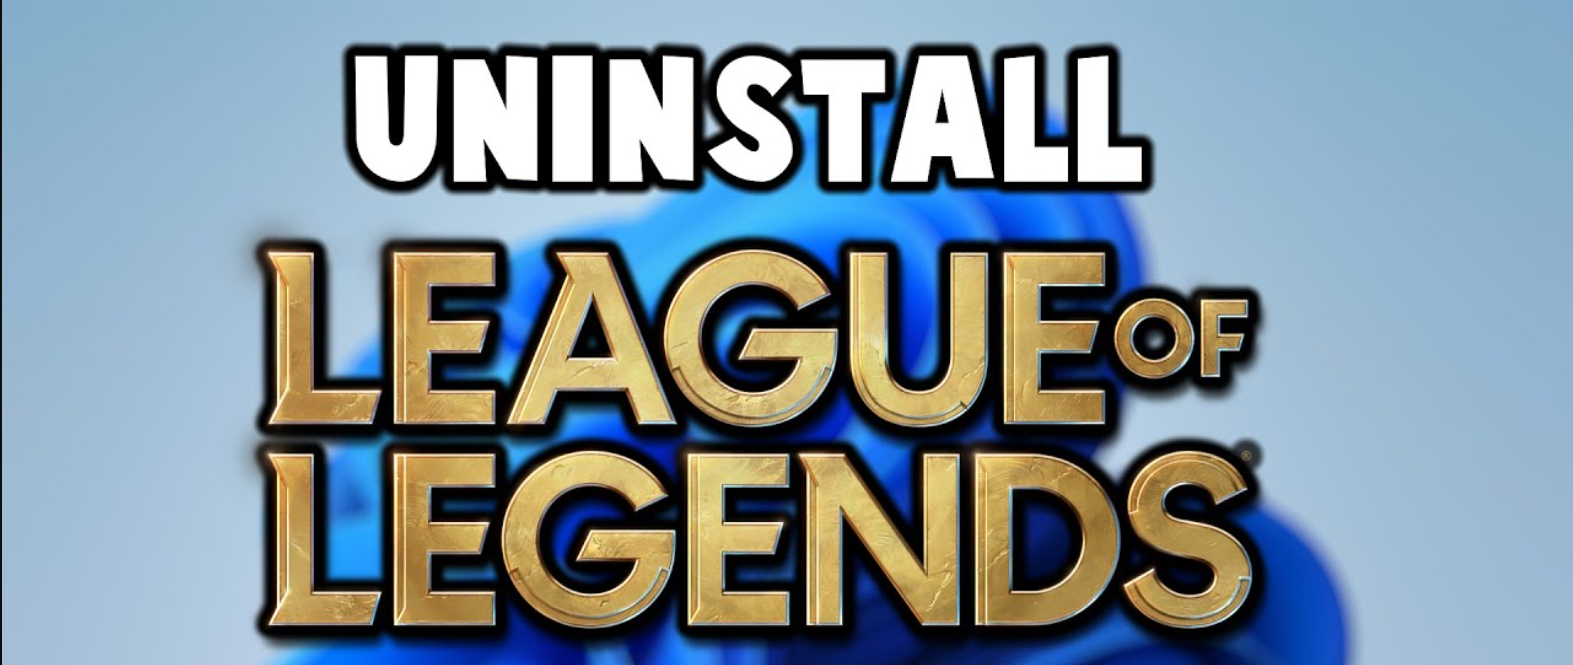 uninstall league of legends